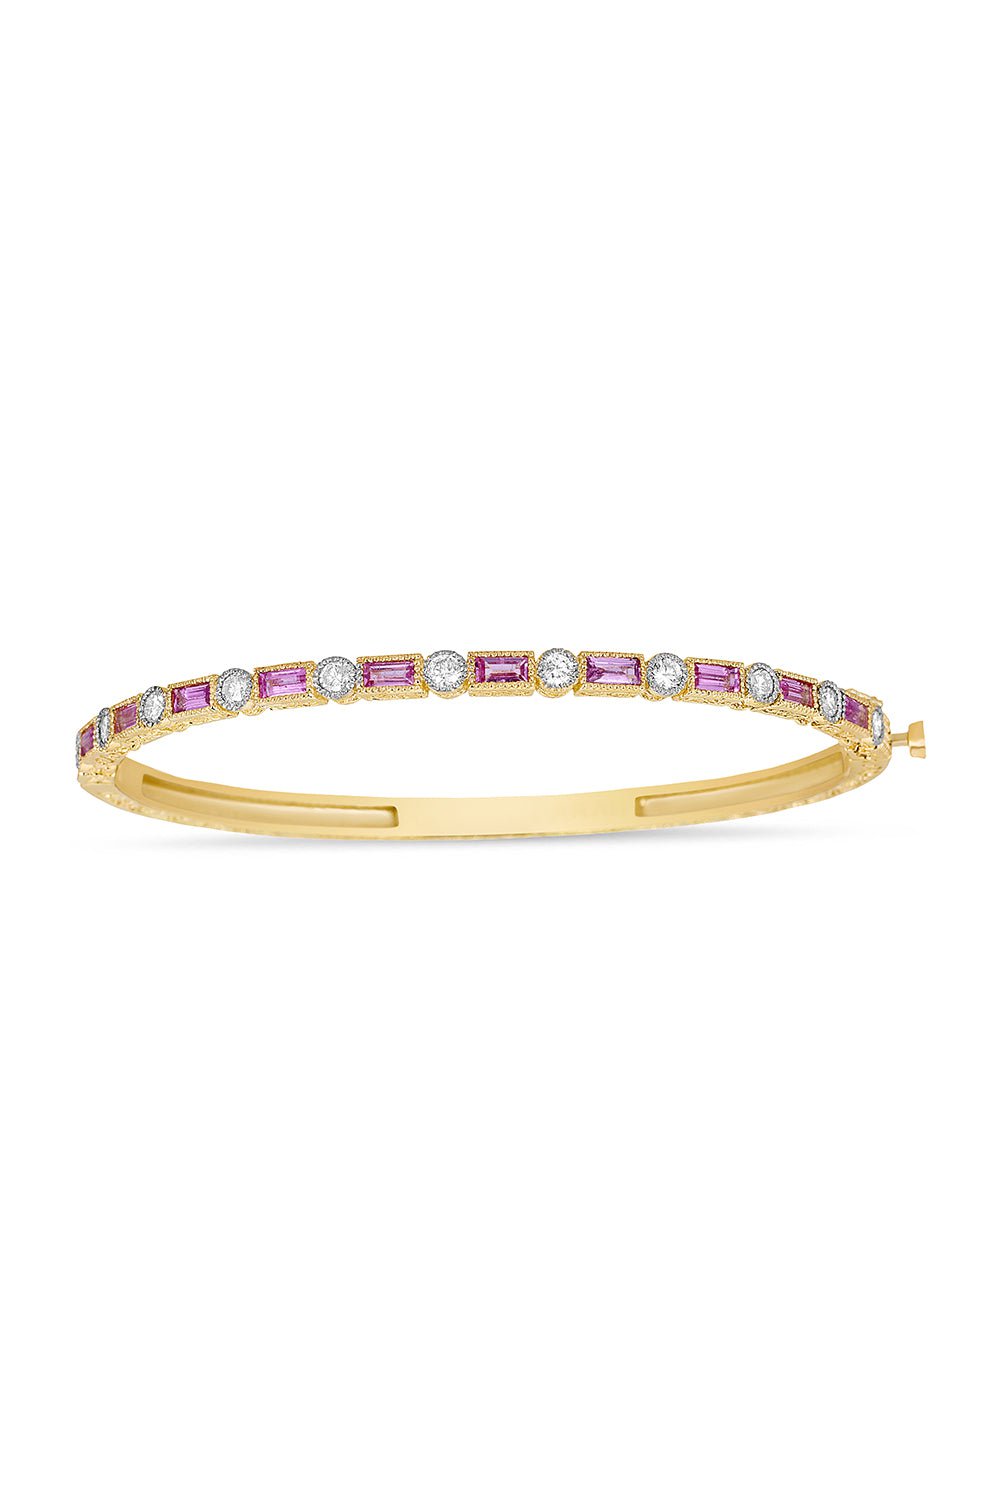 TANYA FARAH-Modern Etruscan Pink Sapphire Baguette Diamond Bangle-YELLOW GOLD